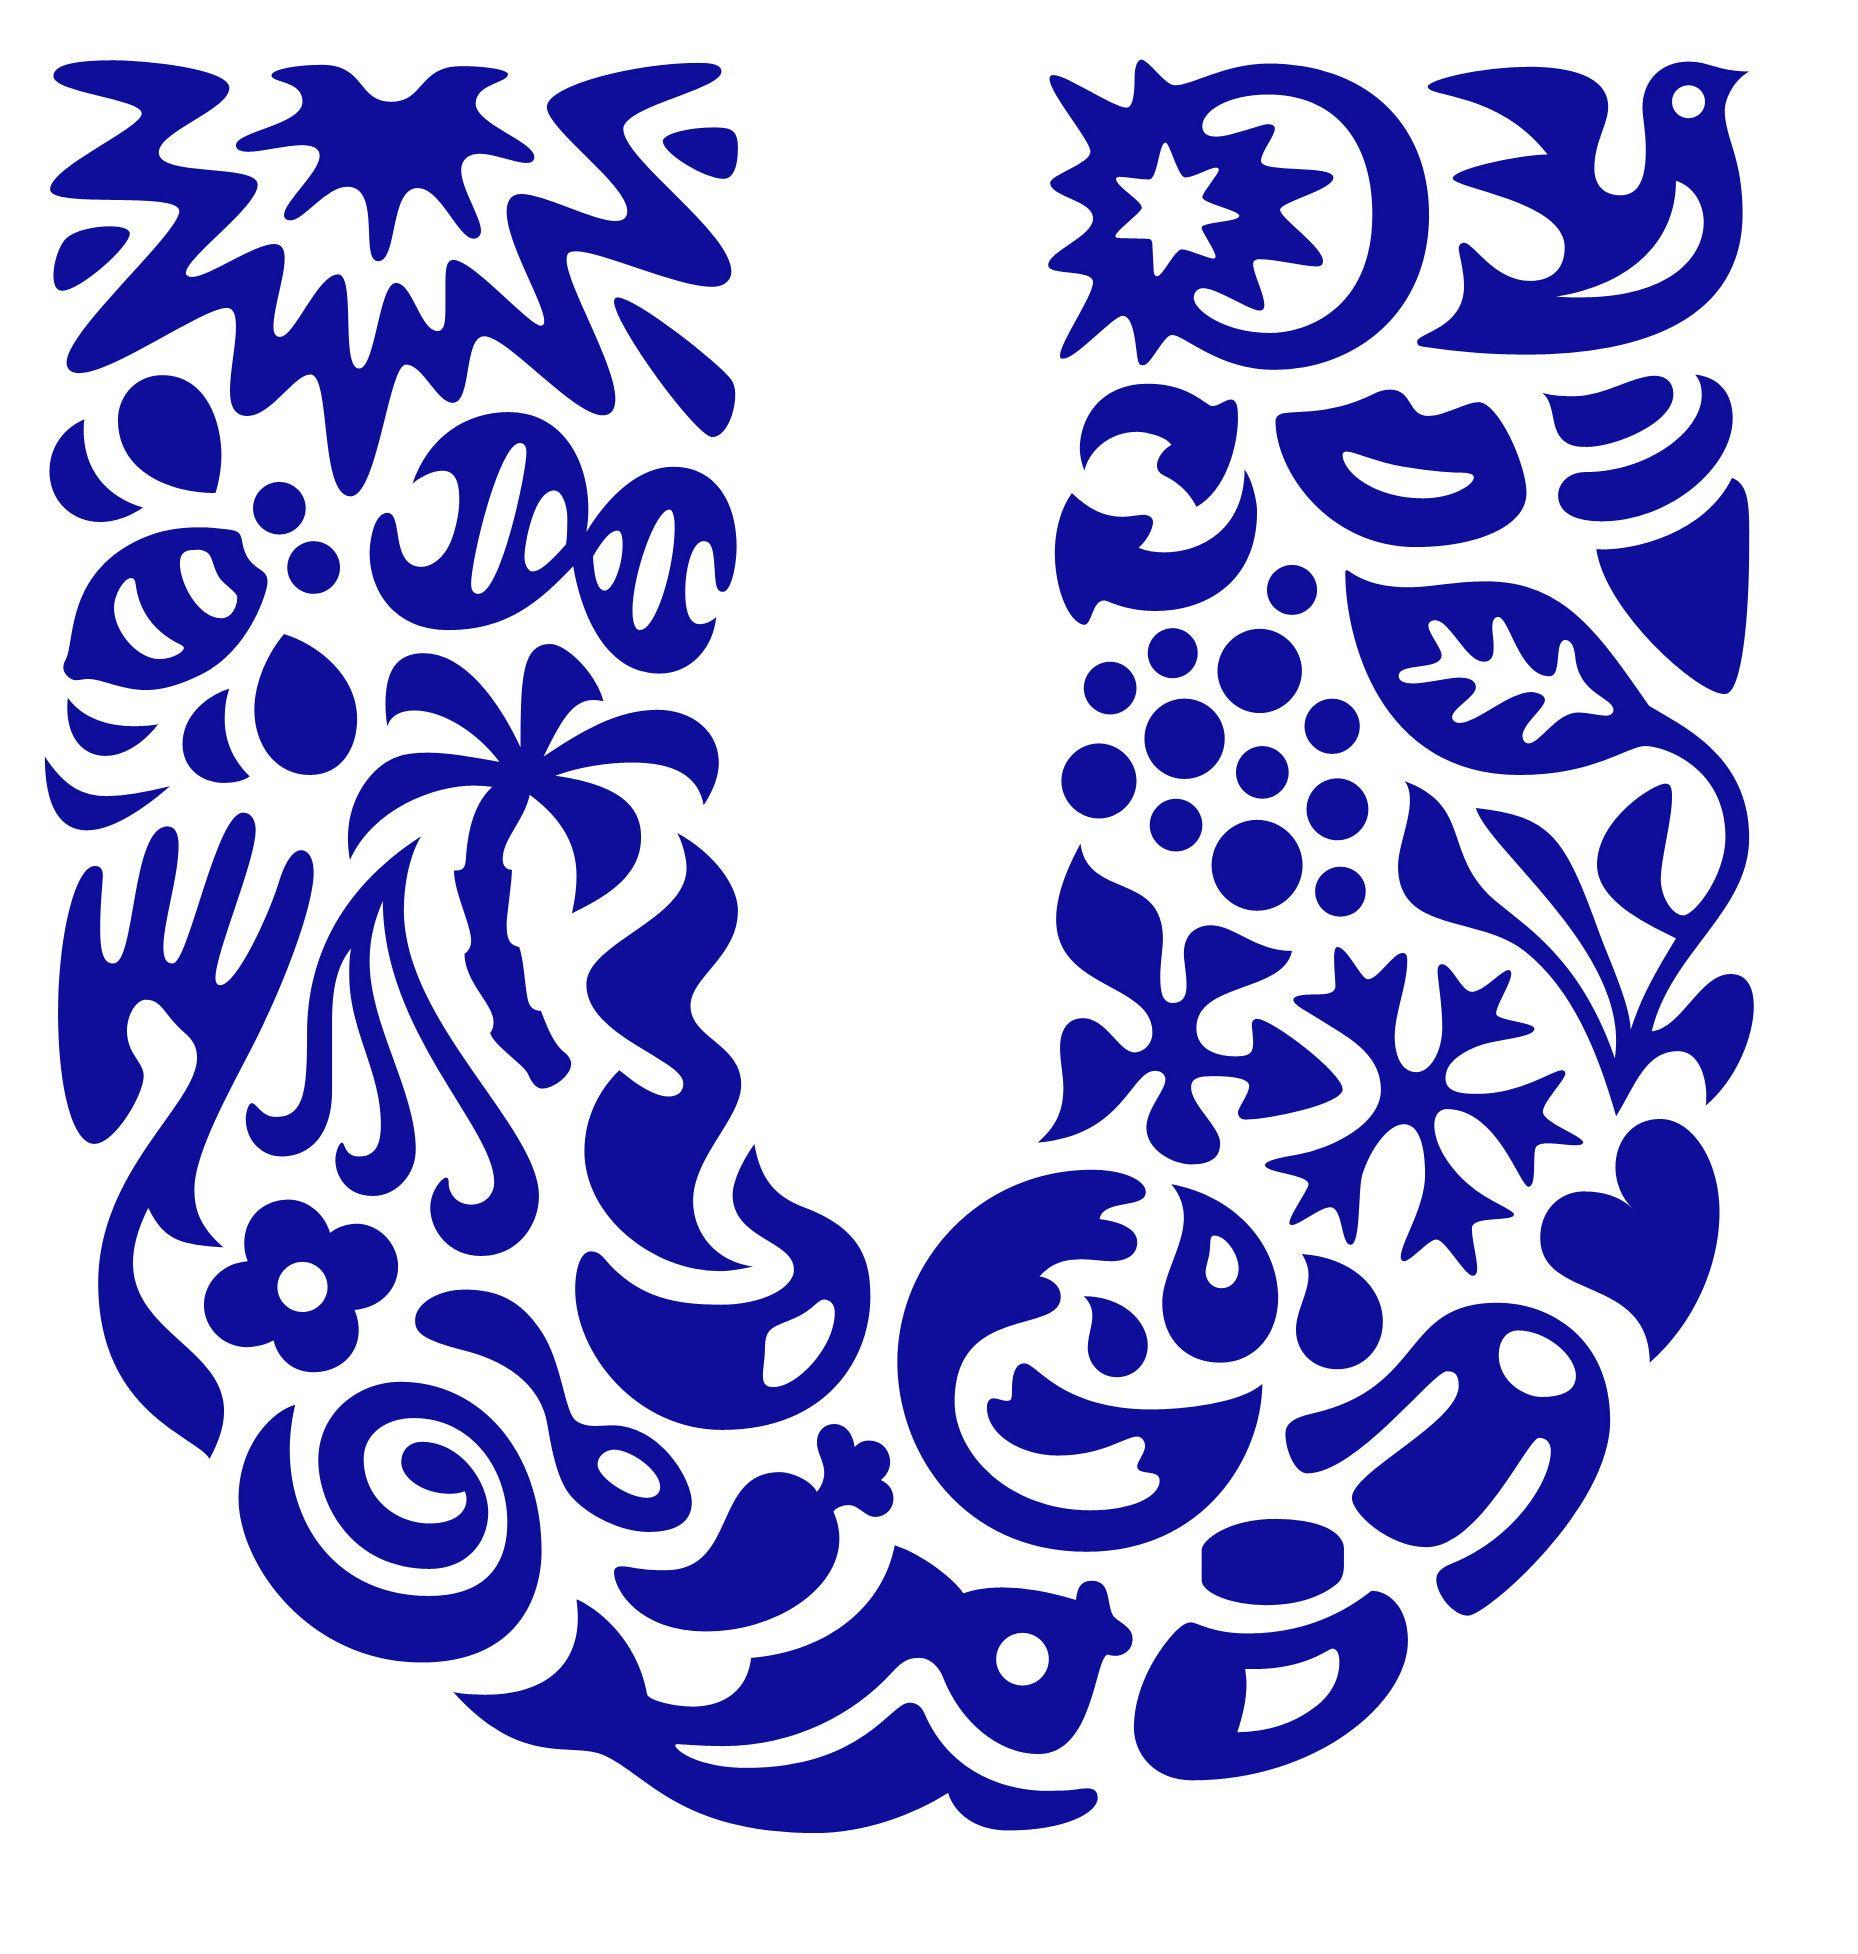 Flowery U Logo - Flowery U Logo - 2019 Logo Ideas & Designs